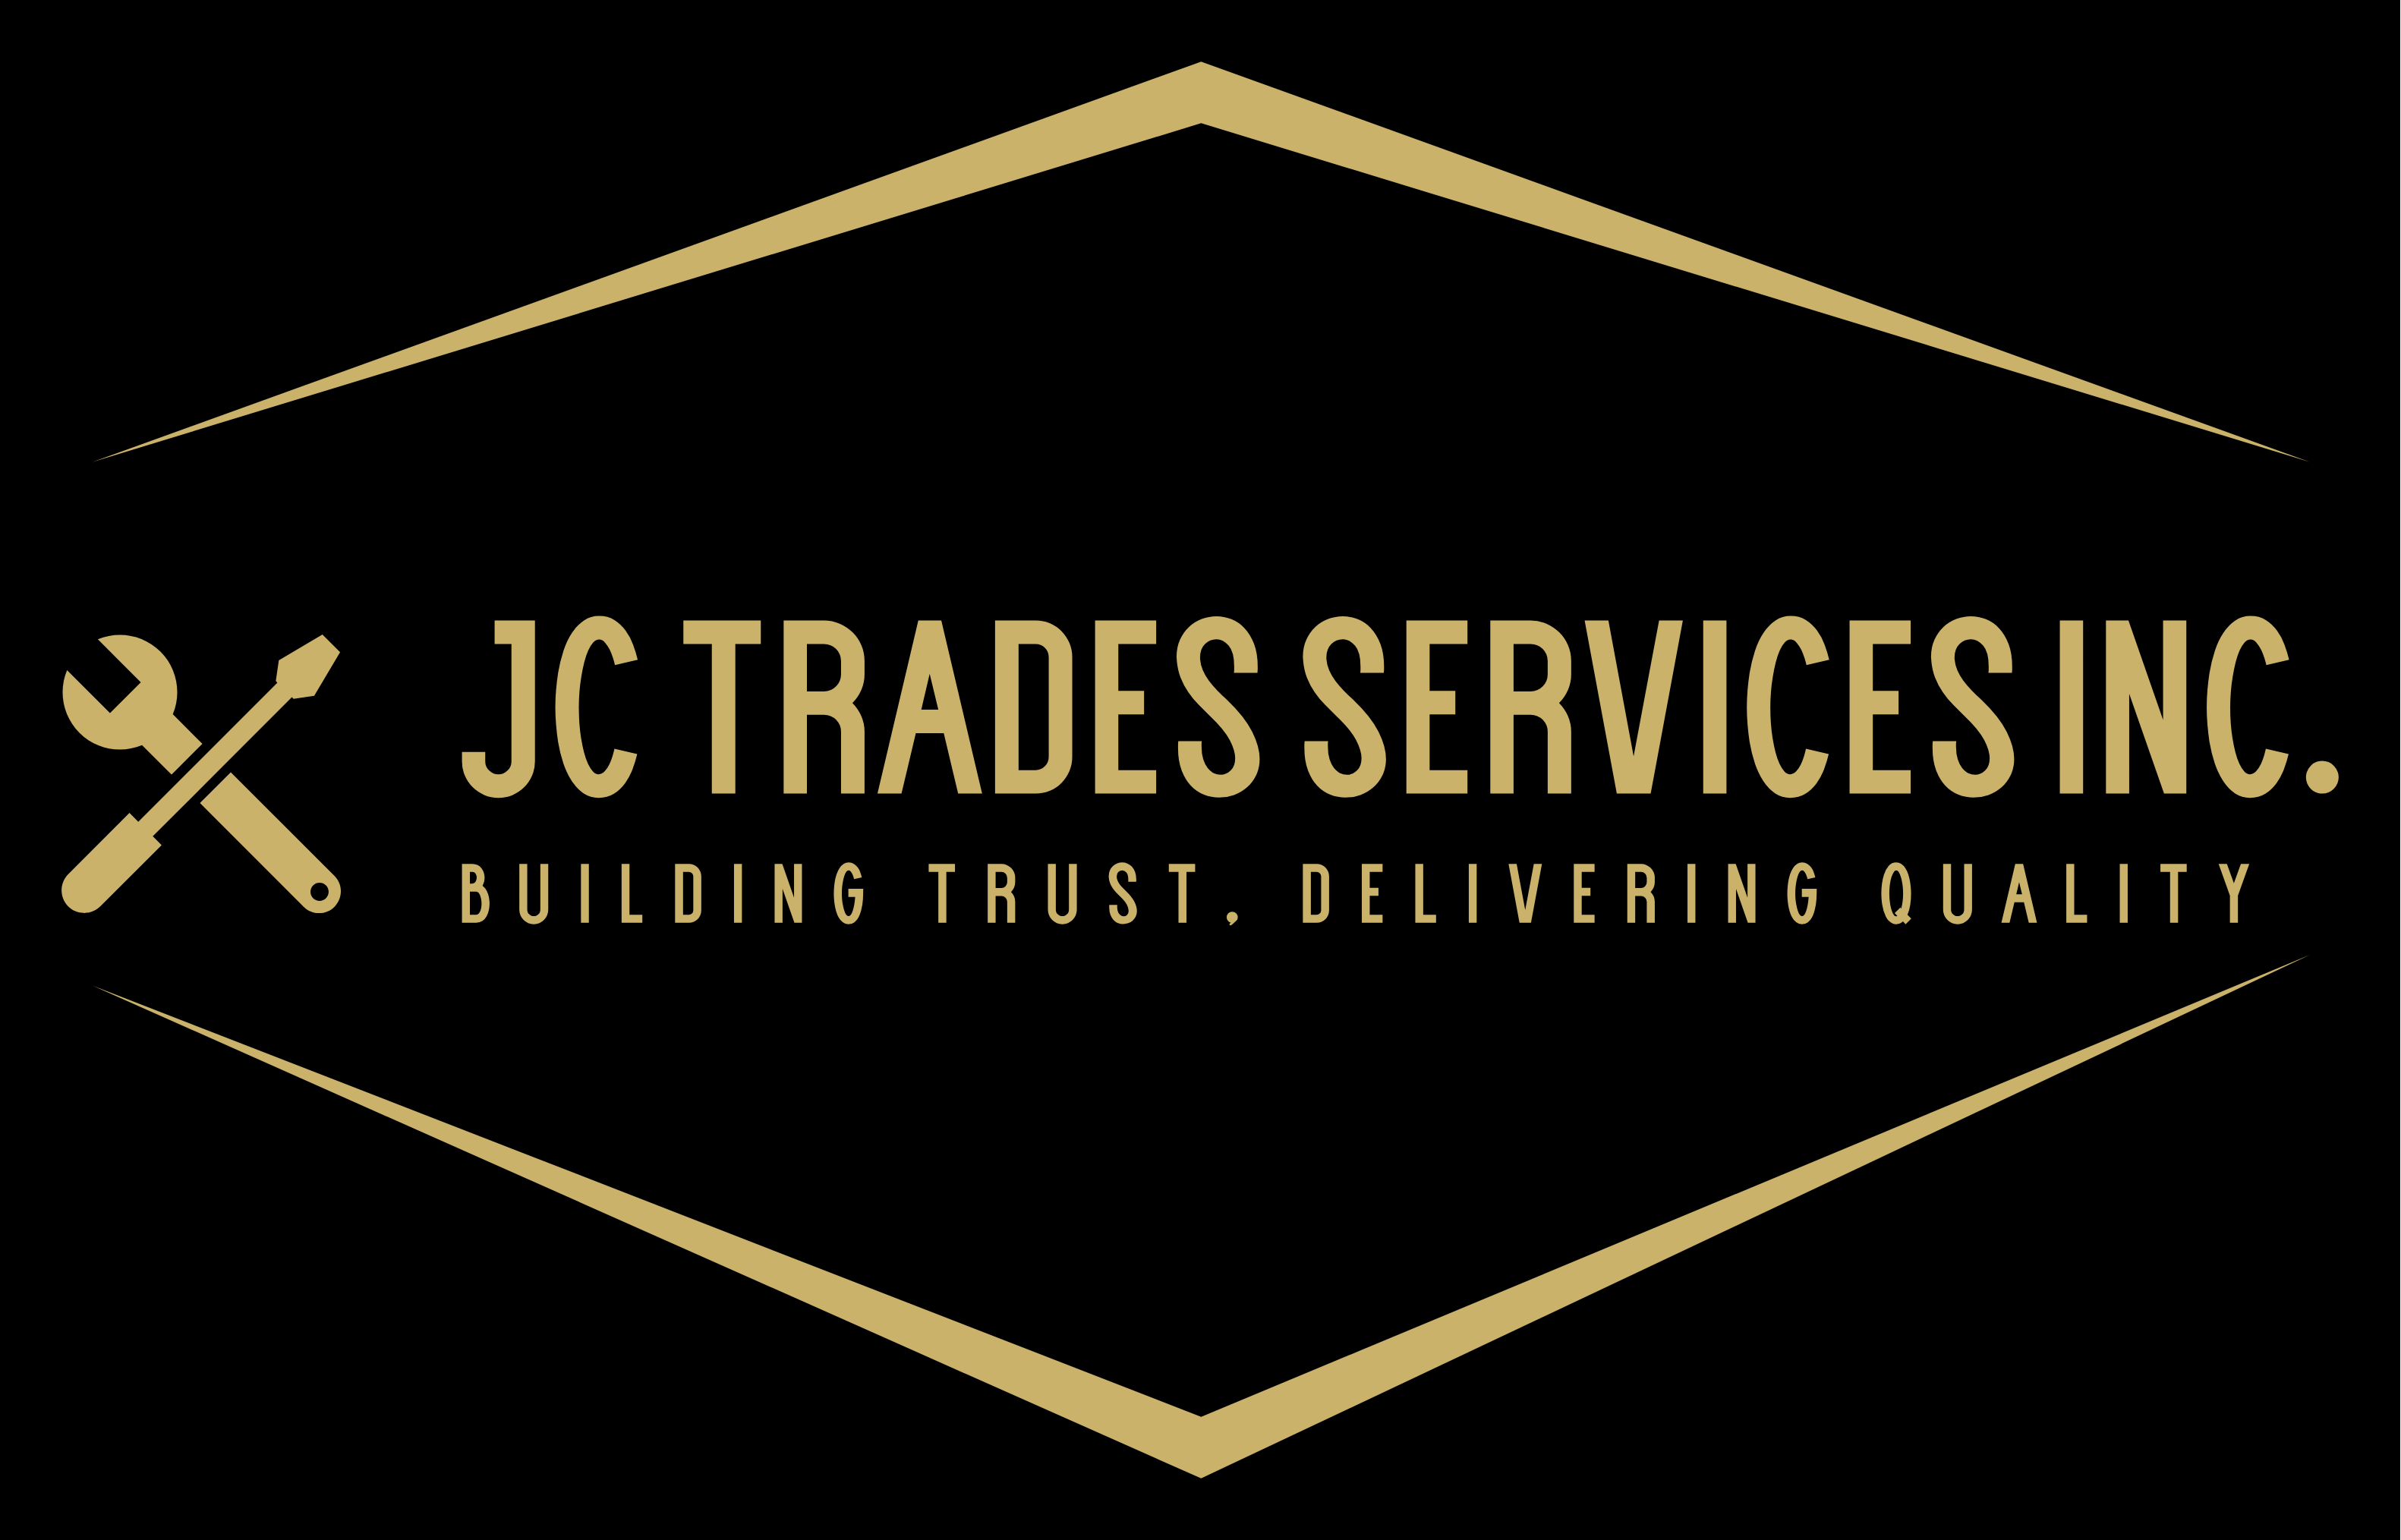 JC Trades Services Inc